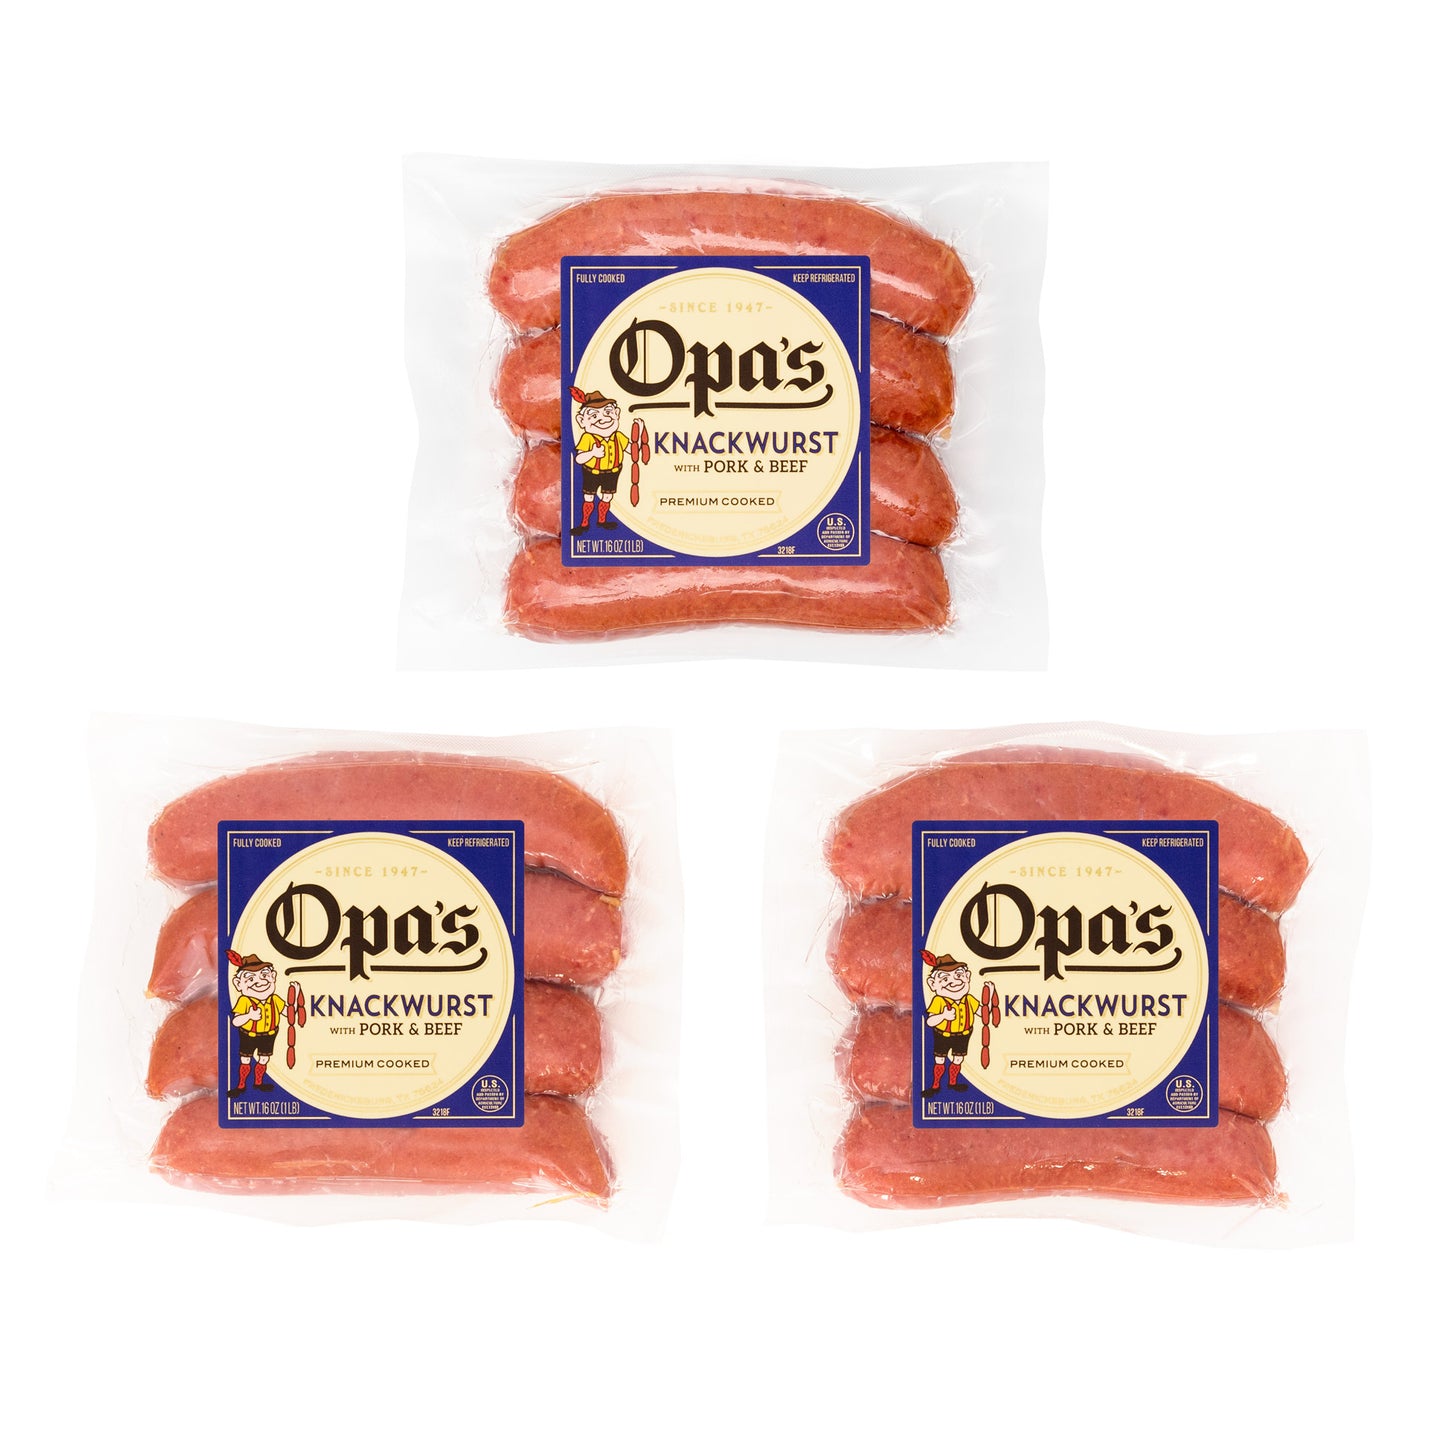 Opa's Premium Cooked Knackwurst